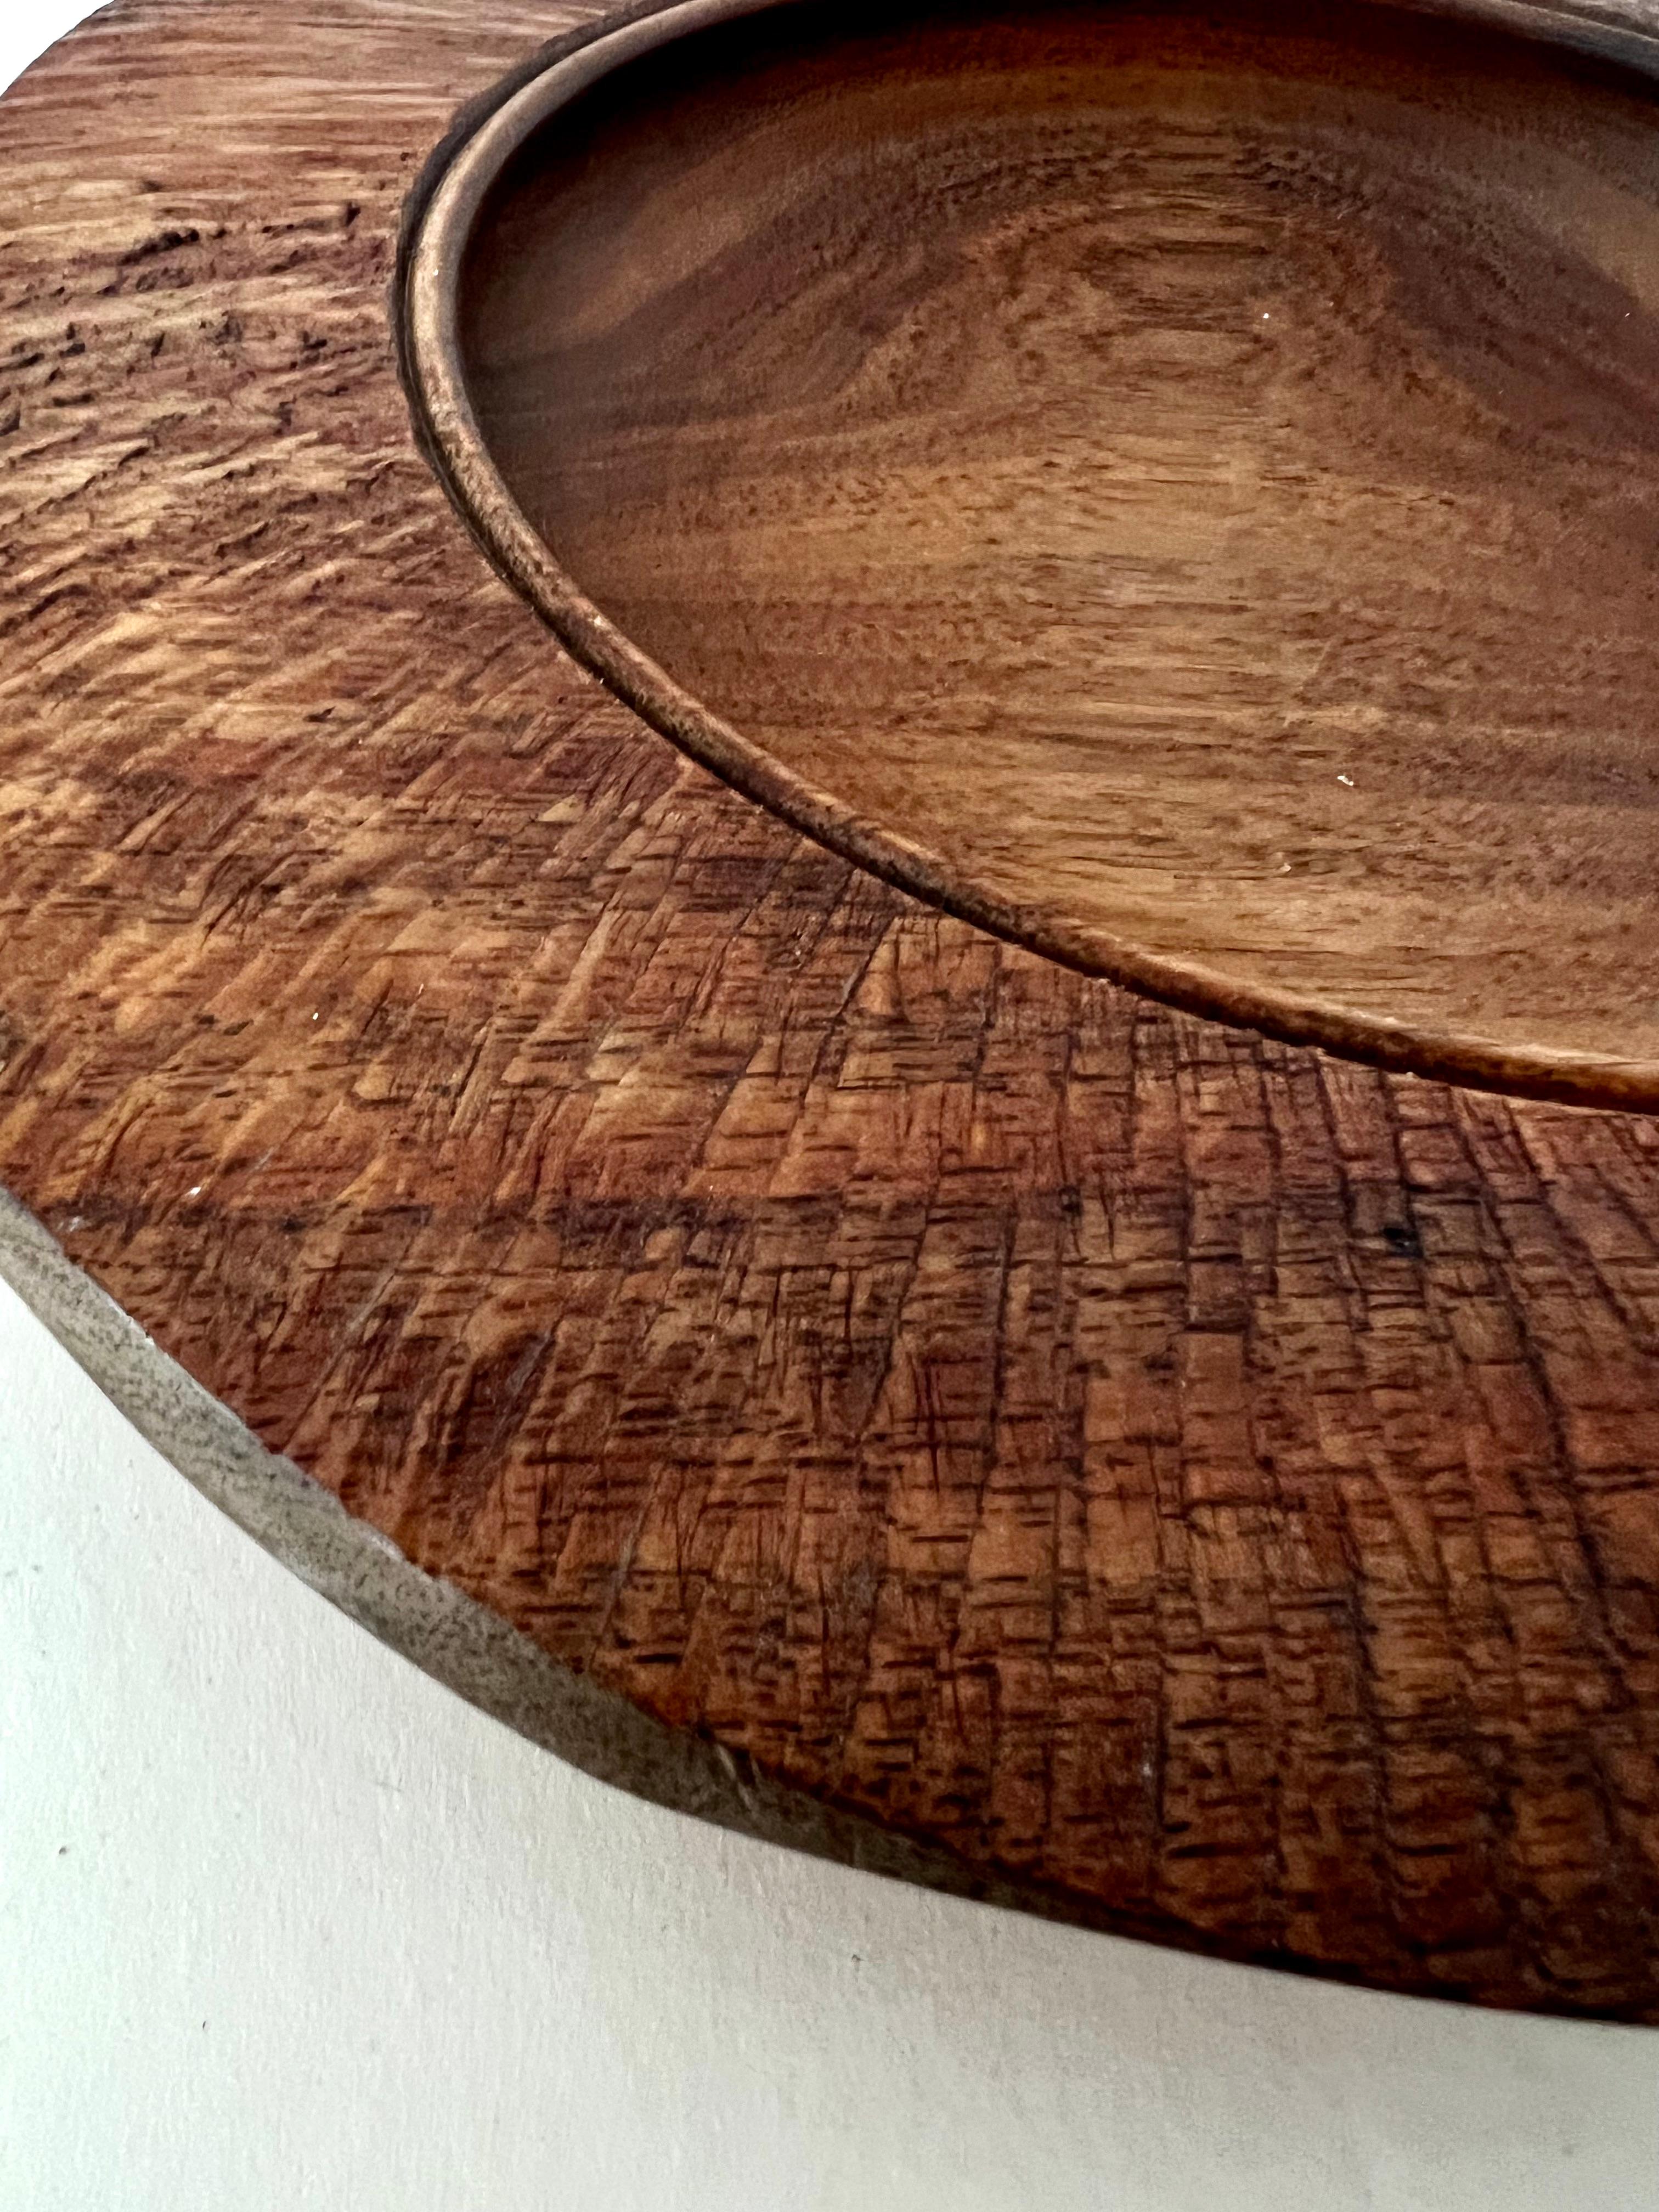 Hardwood Signed Handmade New Zealand Blackwood Bowl with Rough Hewn Edges For Sale